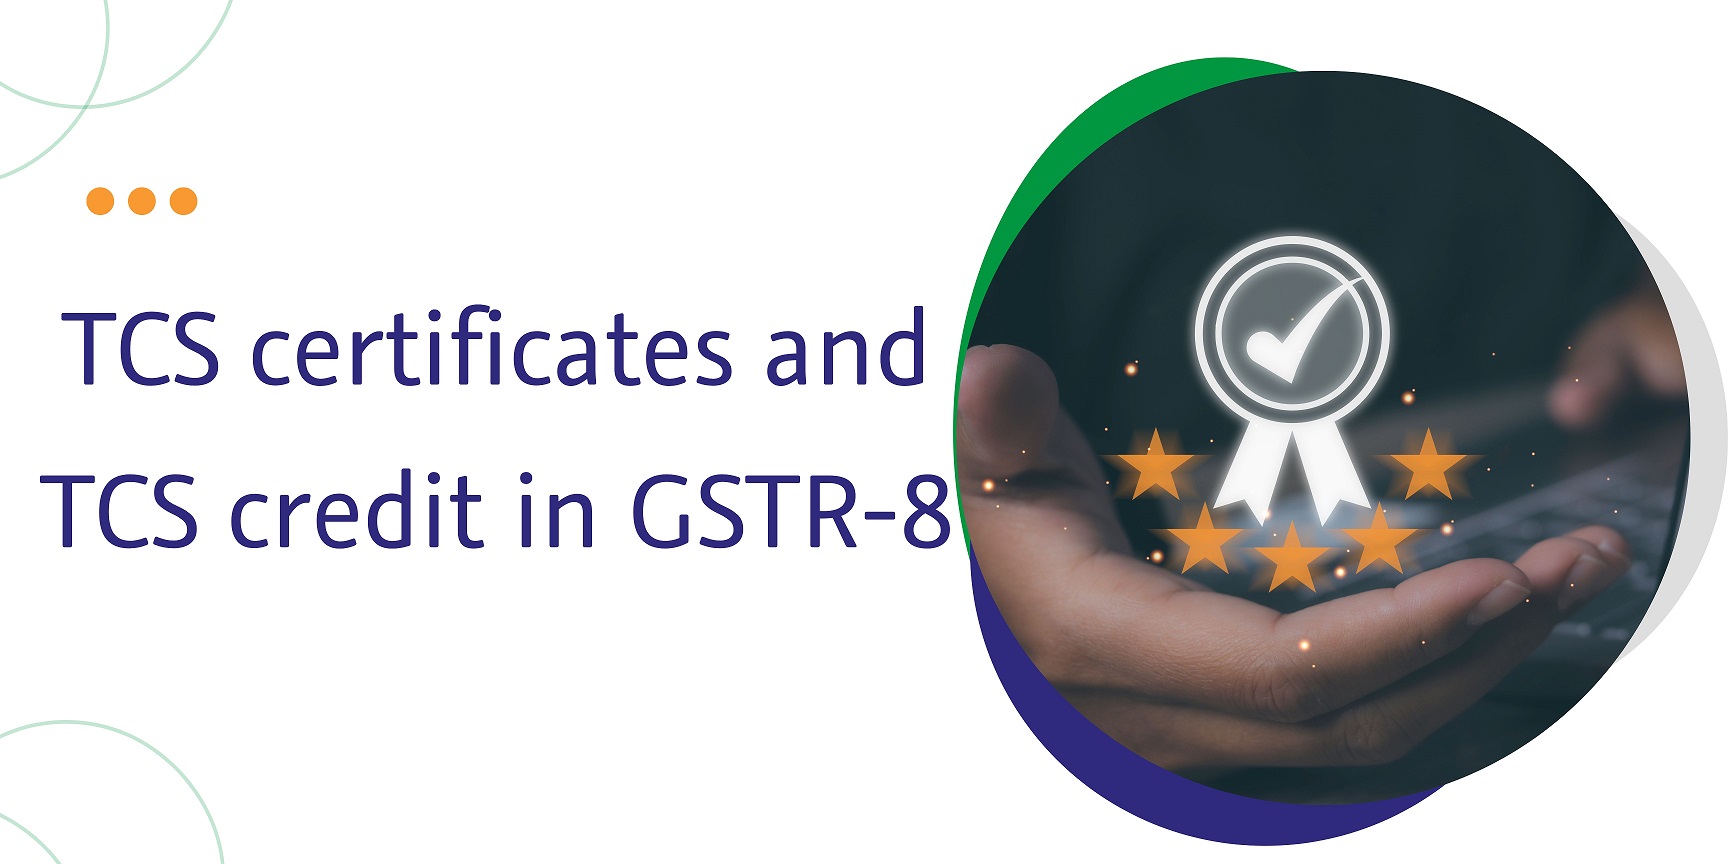 CaptainBiz:TCS certificates and TCS credit in GSTR-8